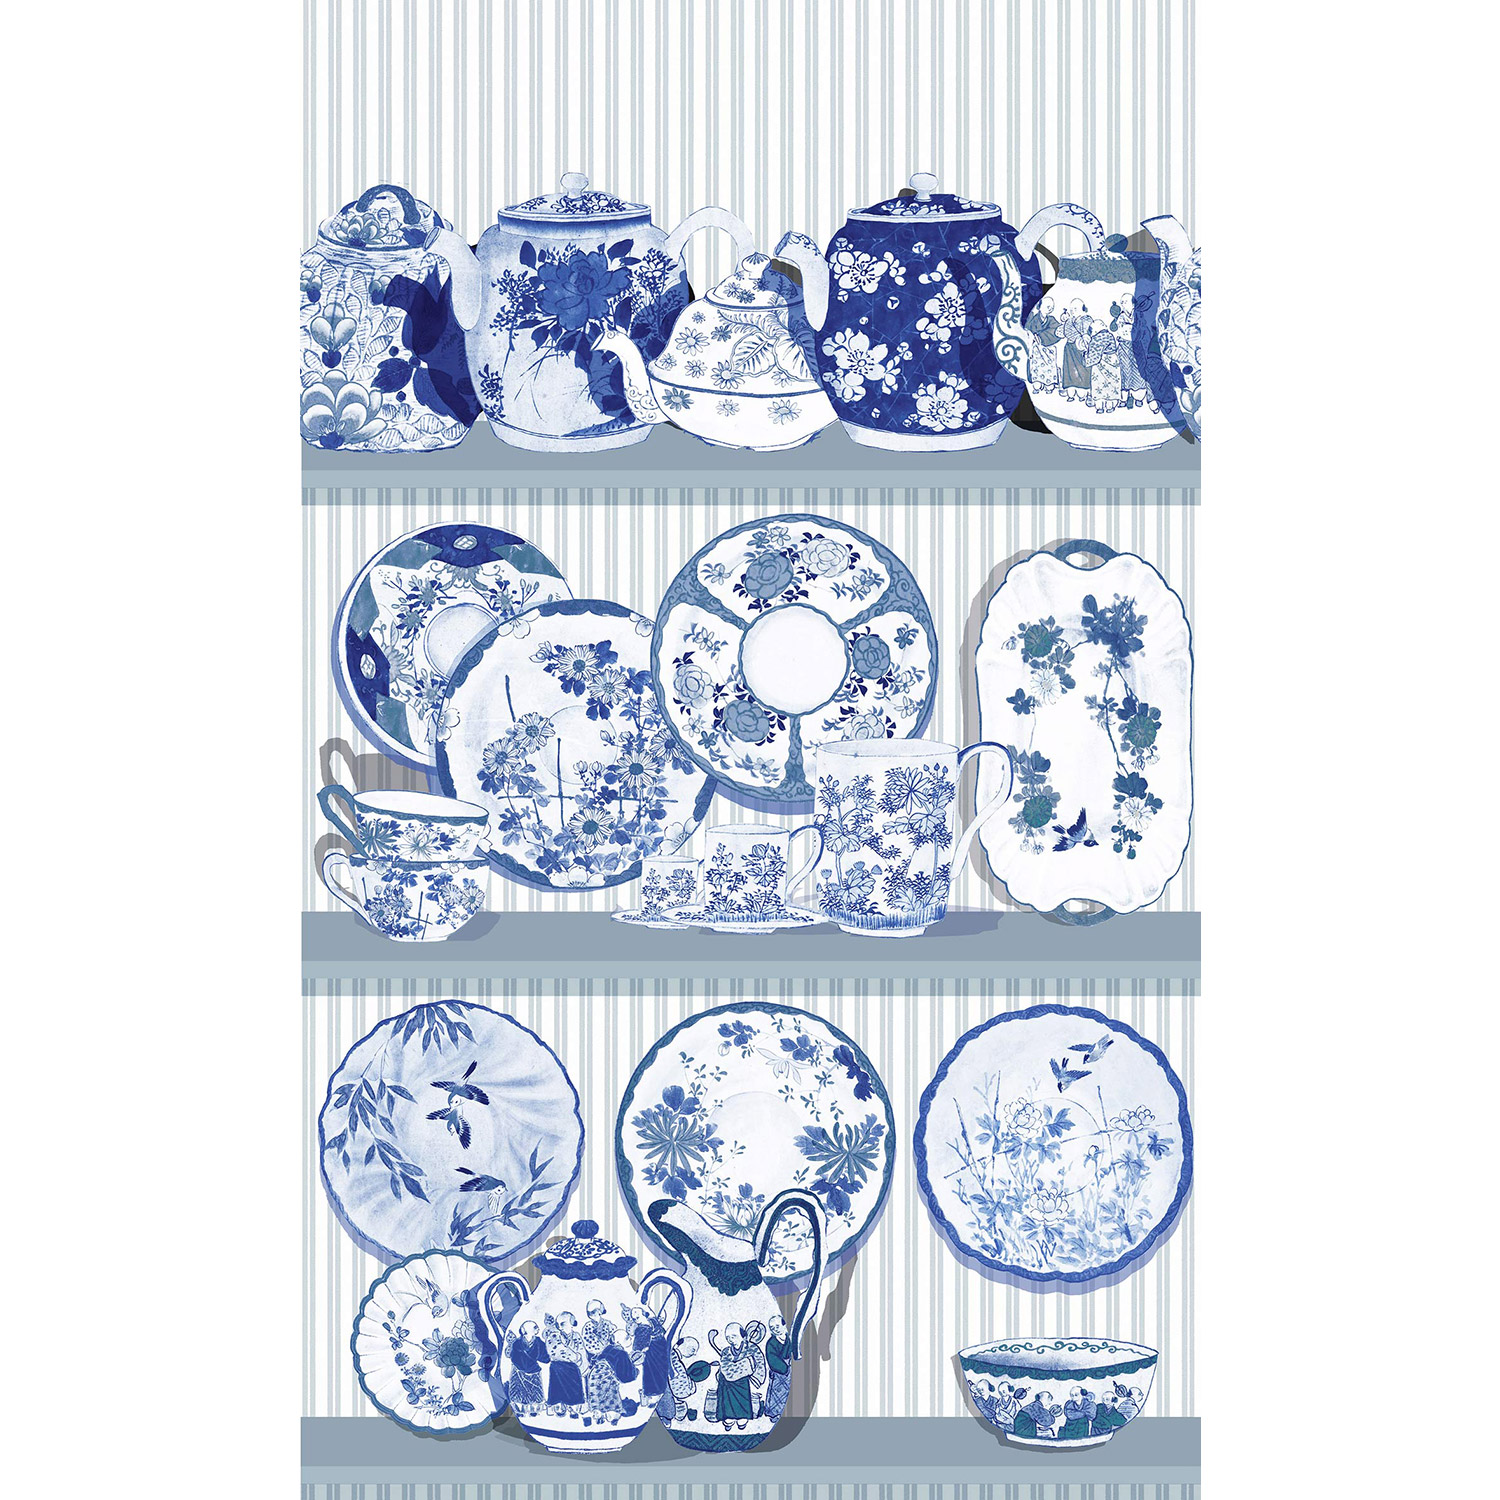 images/productimages/small/gdw-5769-002-teatime-azul-gastonydaniela-papelpintado-figuras-cocina-decoracion-plana.jpg